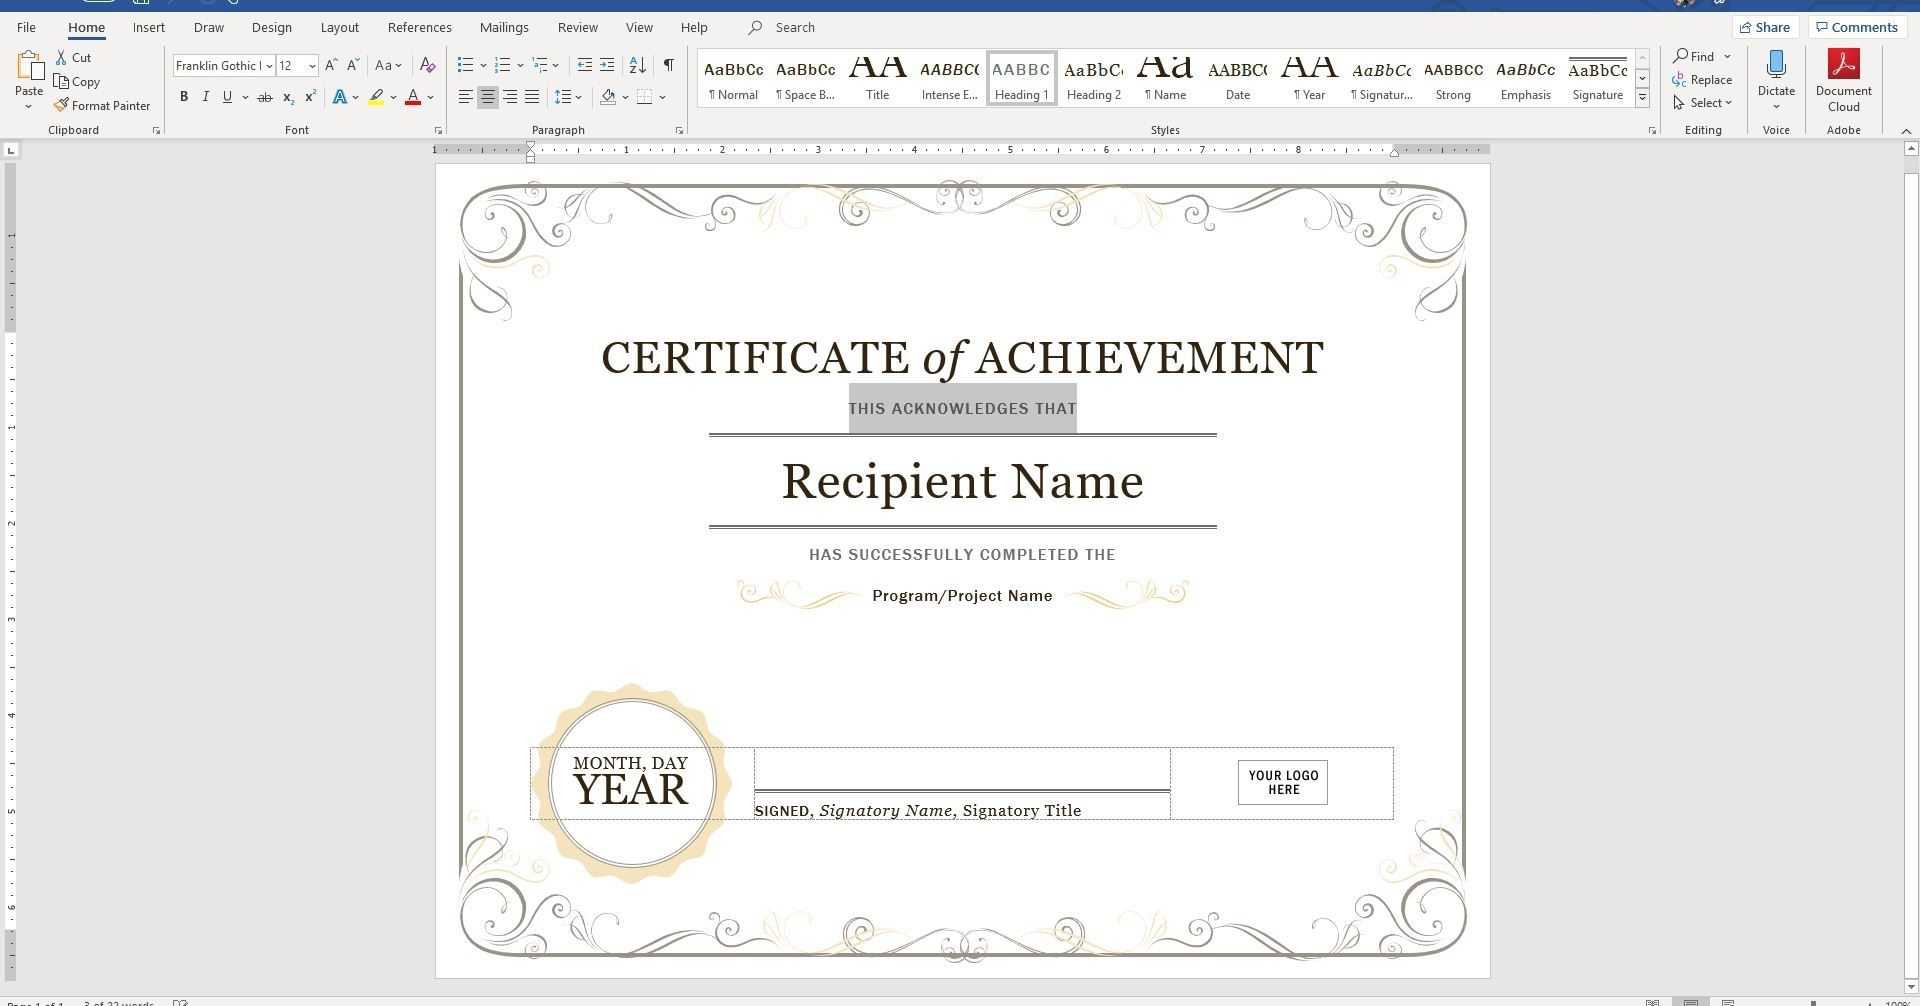 Certificate Template In Word | Safebest.xyz Intended For Free Certificate Templates For Word 2007